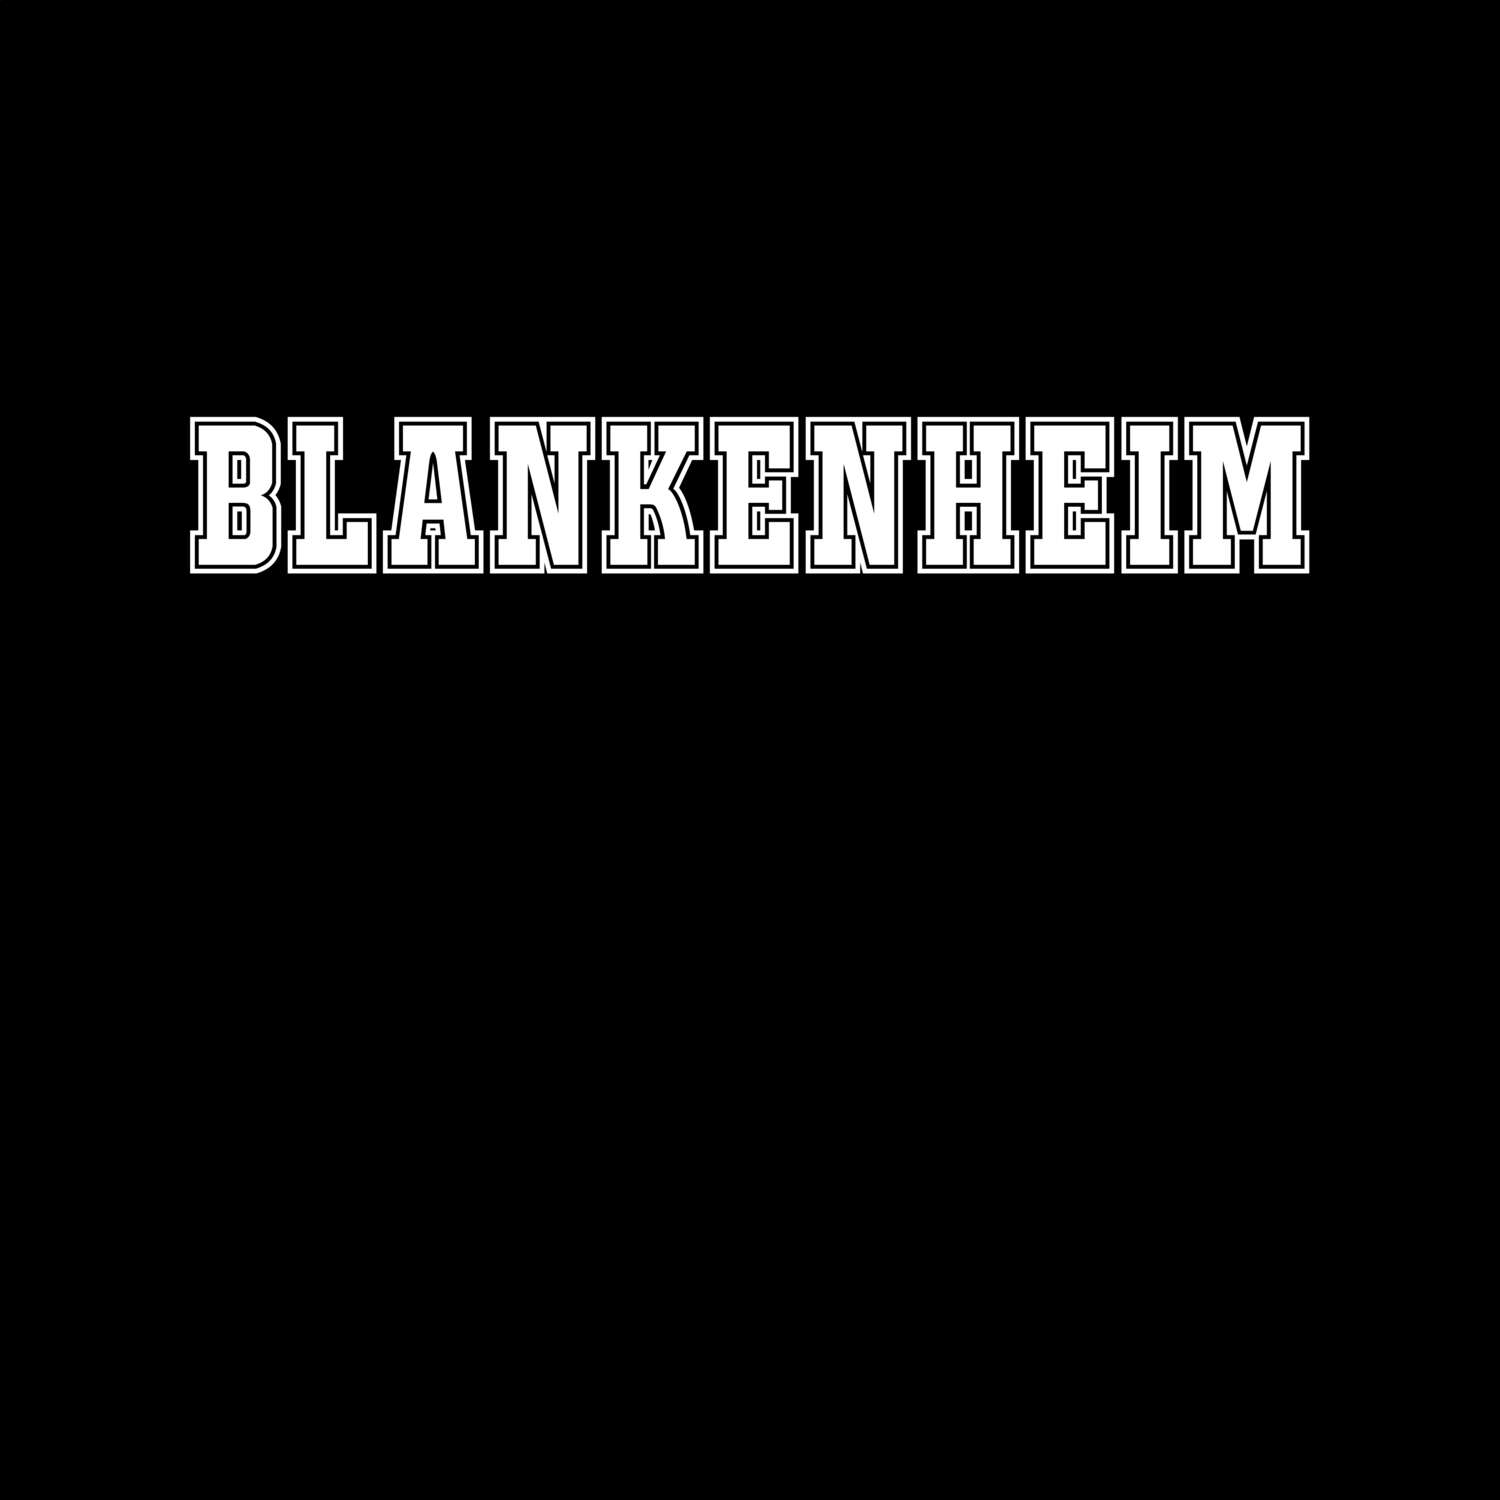 Blankenheim T-Shirt »Classic«